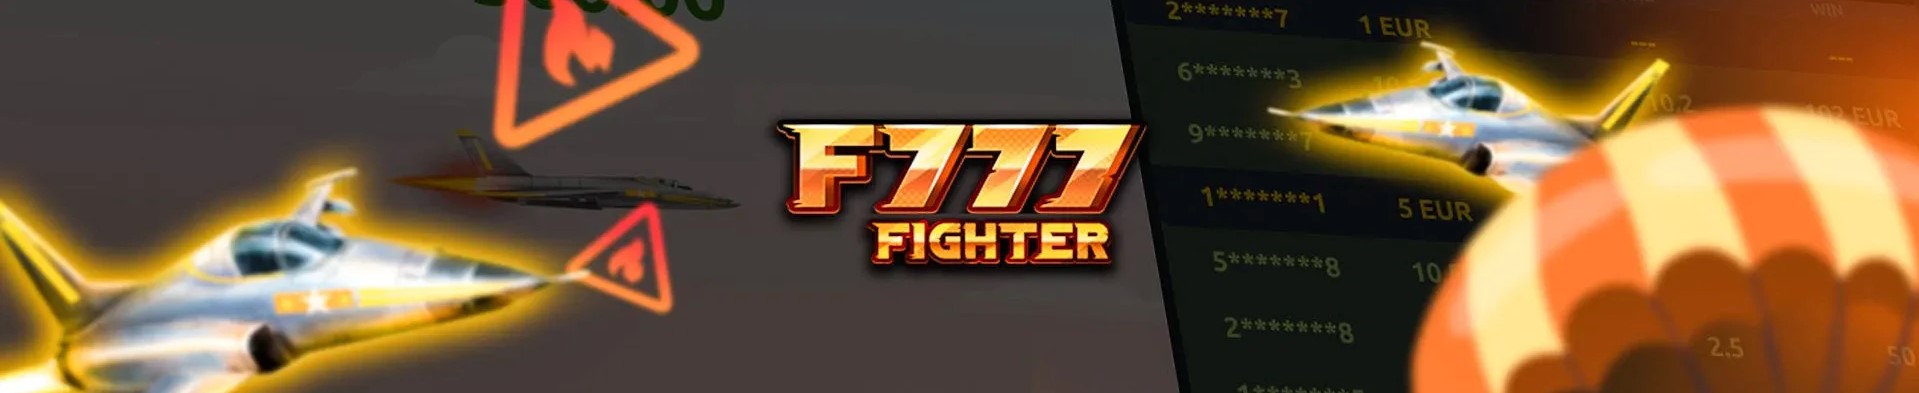 Jeu F777 fighter.